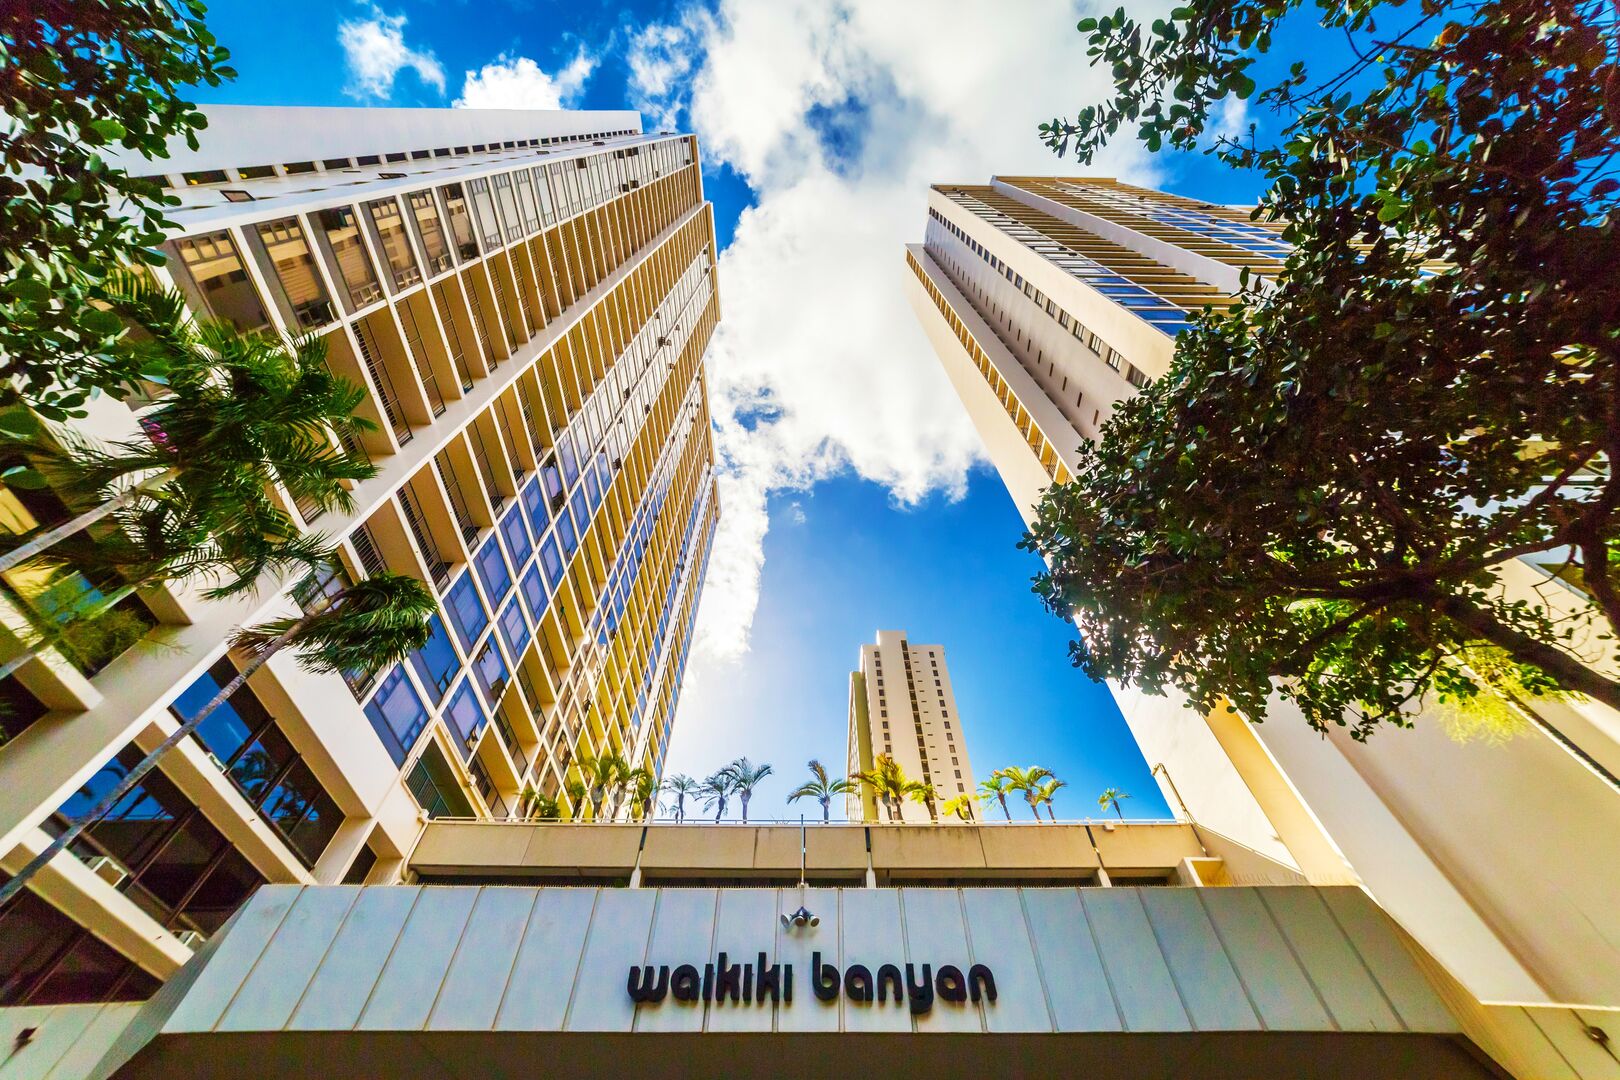 Waikiki Banyan and its two towers